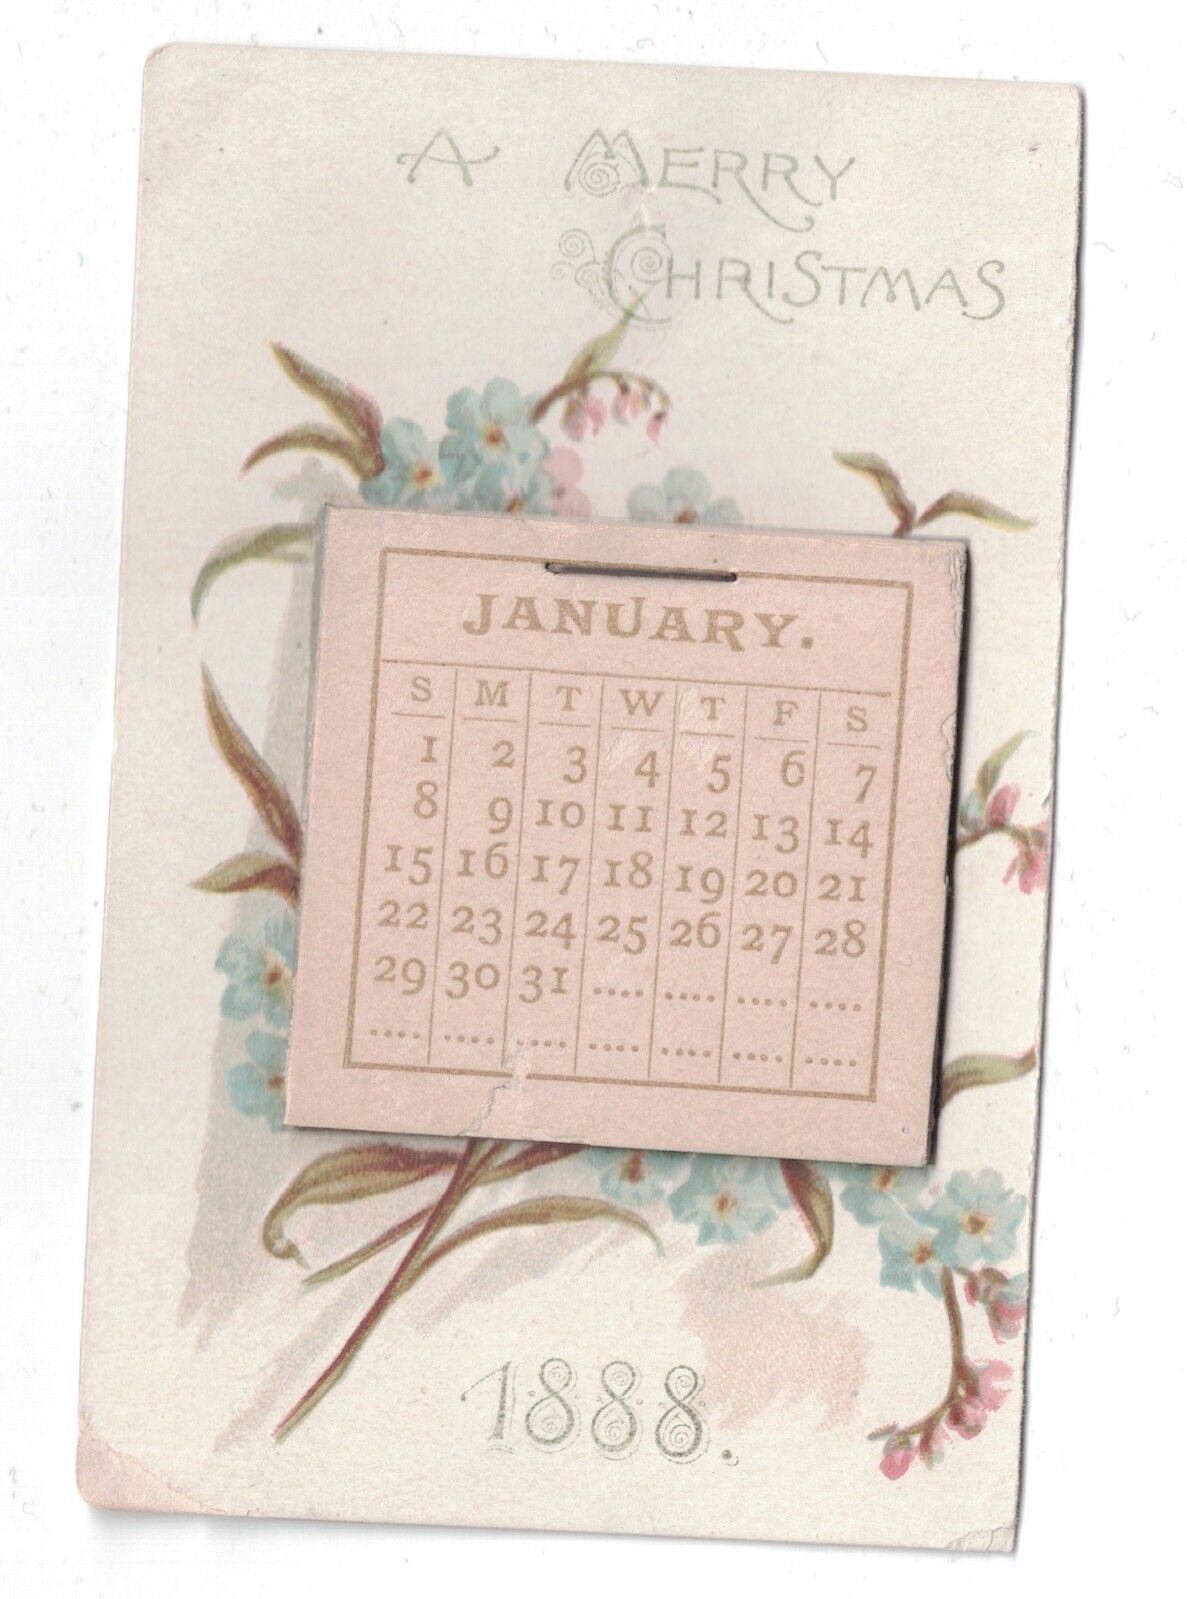 A Merry Christmas 1888 Pocket Calendar Card Flowers L.B.C. C15